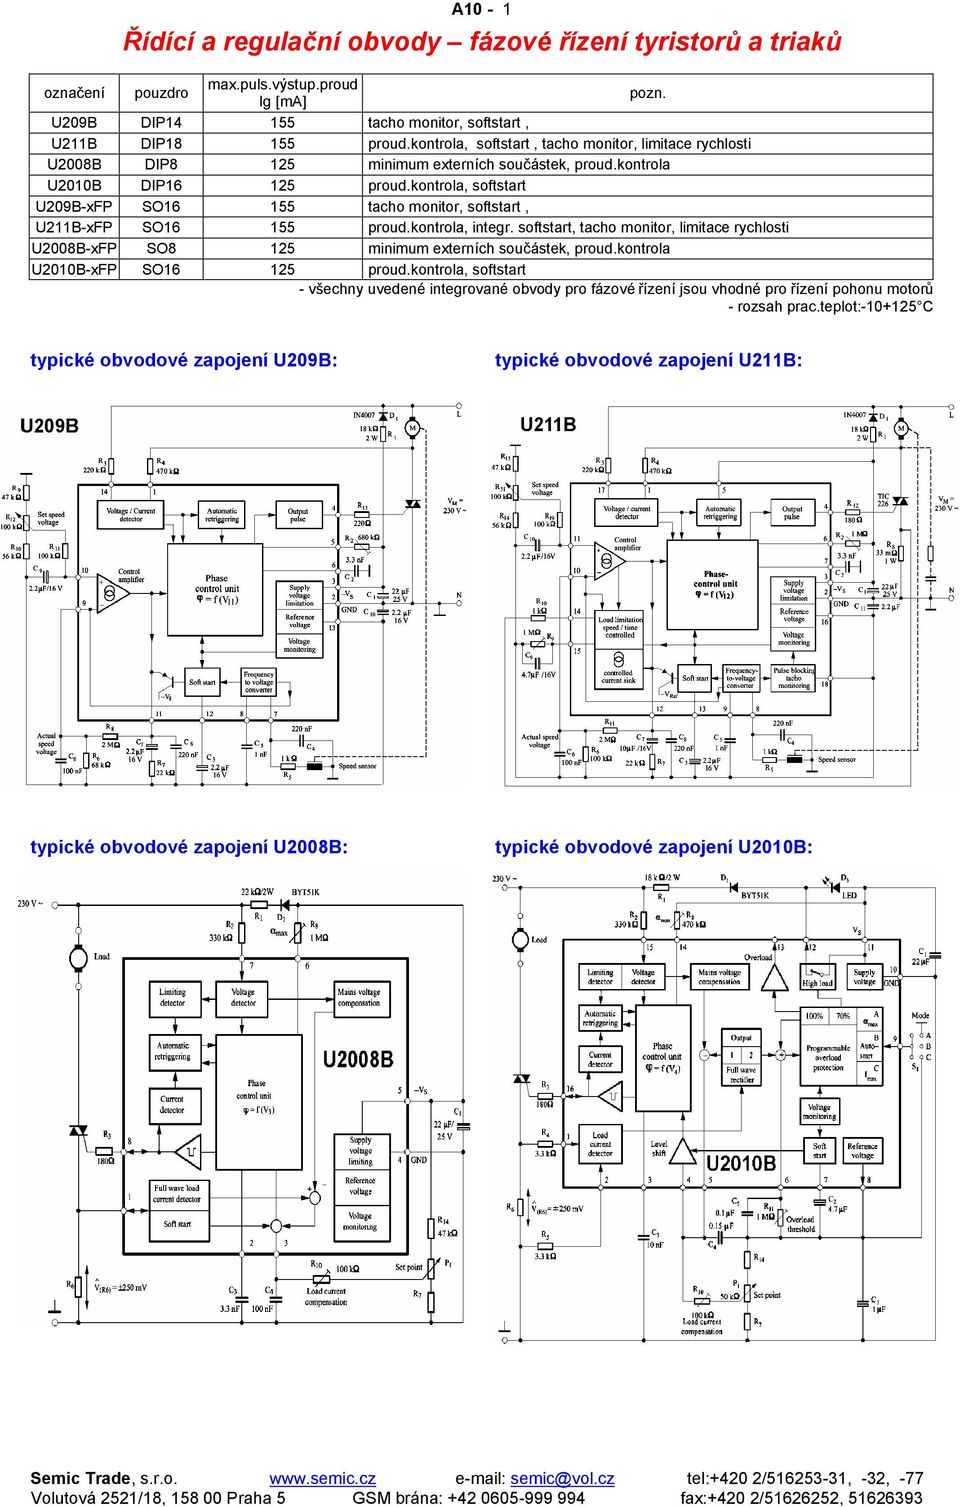 kontrola, softstart U209B-xFP SO16 155 tacho monitor, softstart, U211B-xFP SO16 155 proud.kontrola, integr.